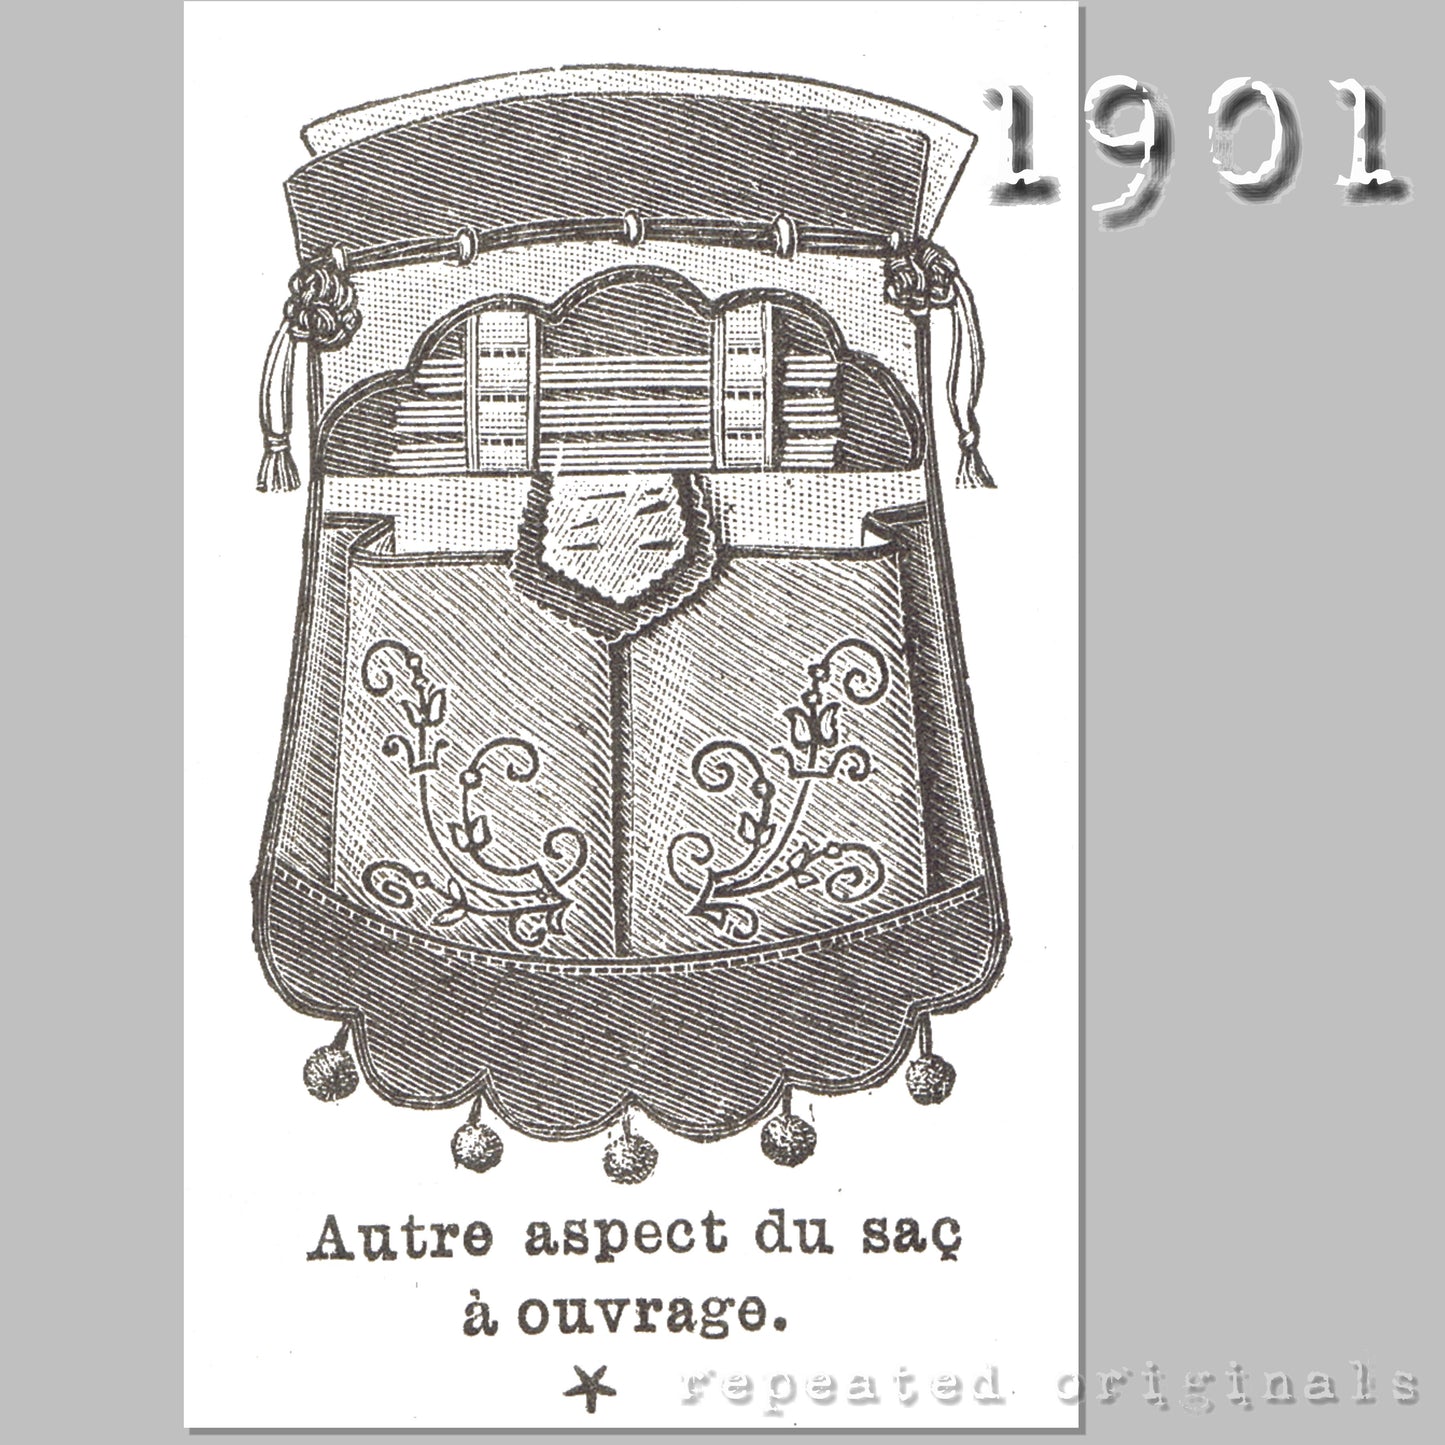 1901 Handwork Bag Sewing Pattern - INSTANT DOWNLOAD PDF